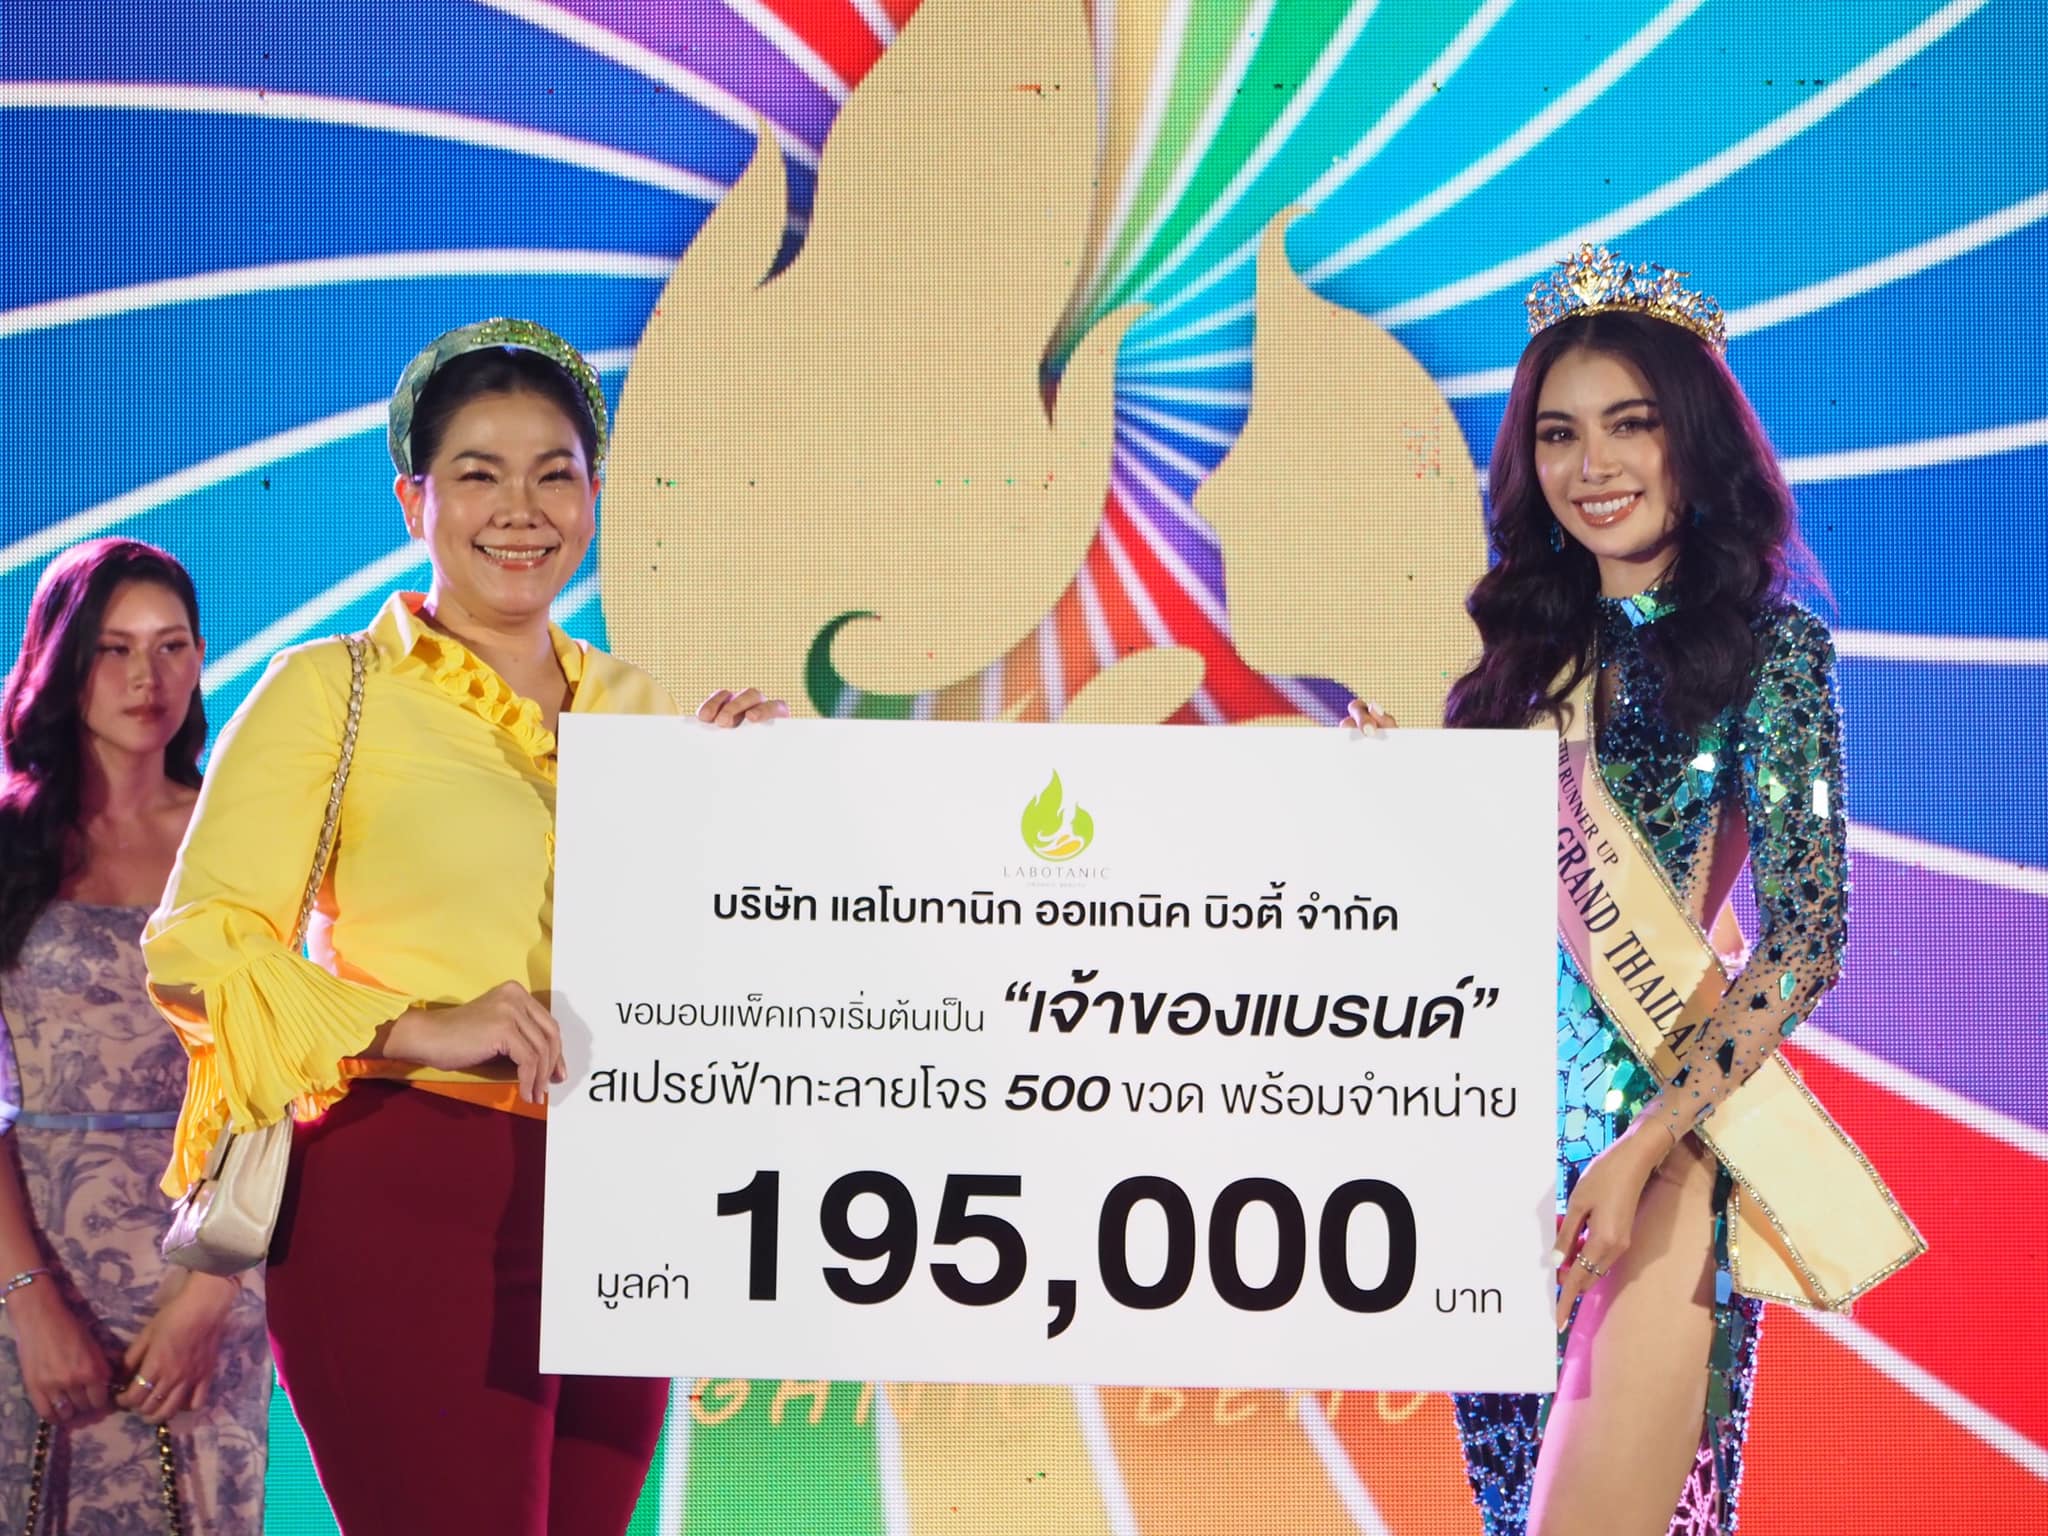 Welcome home "ชมพู อทิตา" Labotanic ร่วมแสดงความยินดีกับคุณชมพู อทิตา พยัคฆ์ Miss Grand ChiangMai 2022